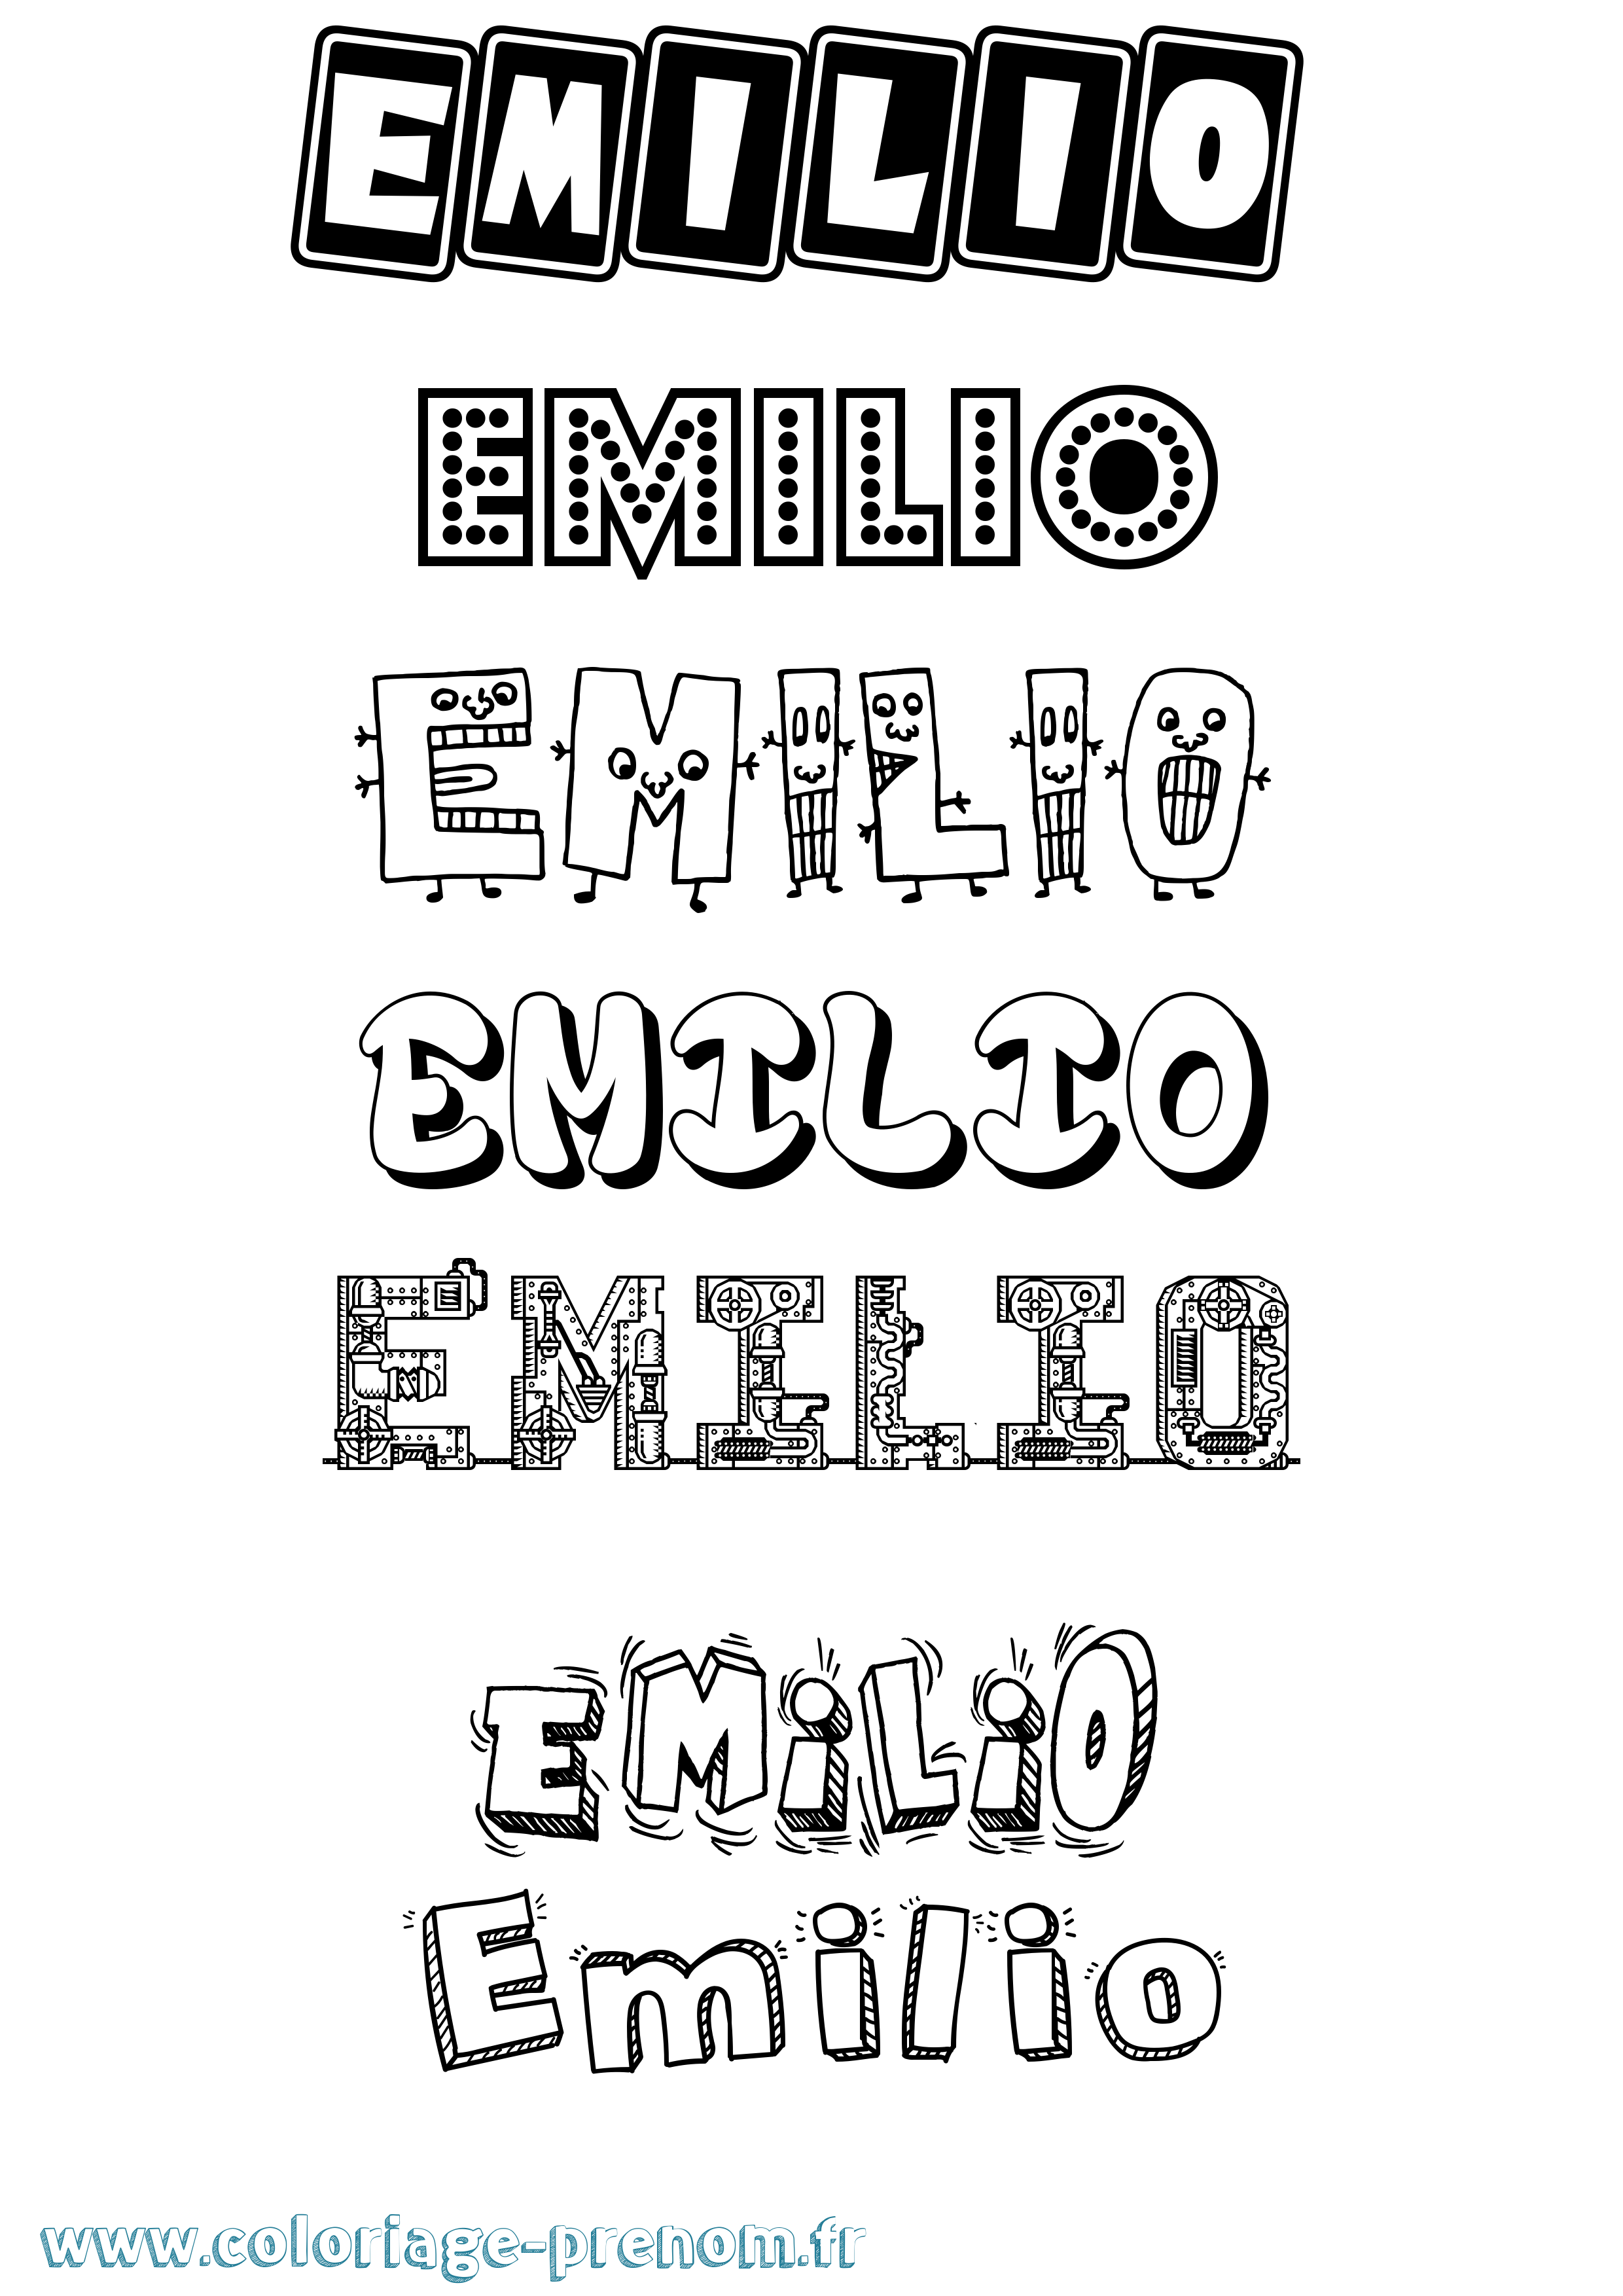 Coloriage prénom Emilio